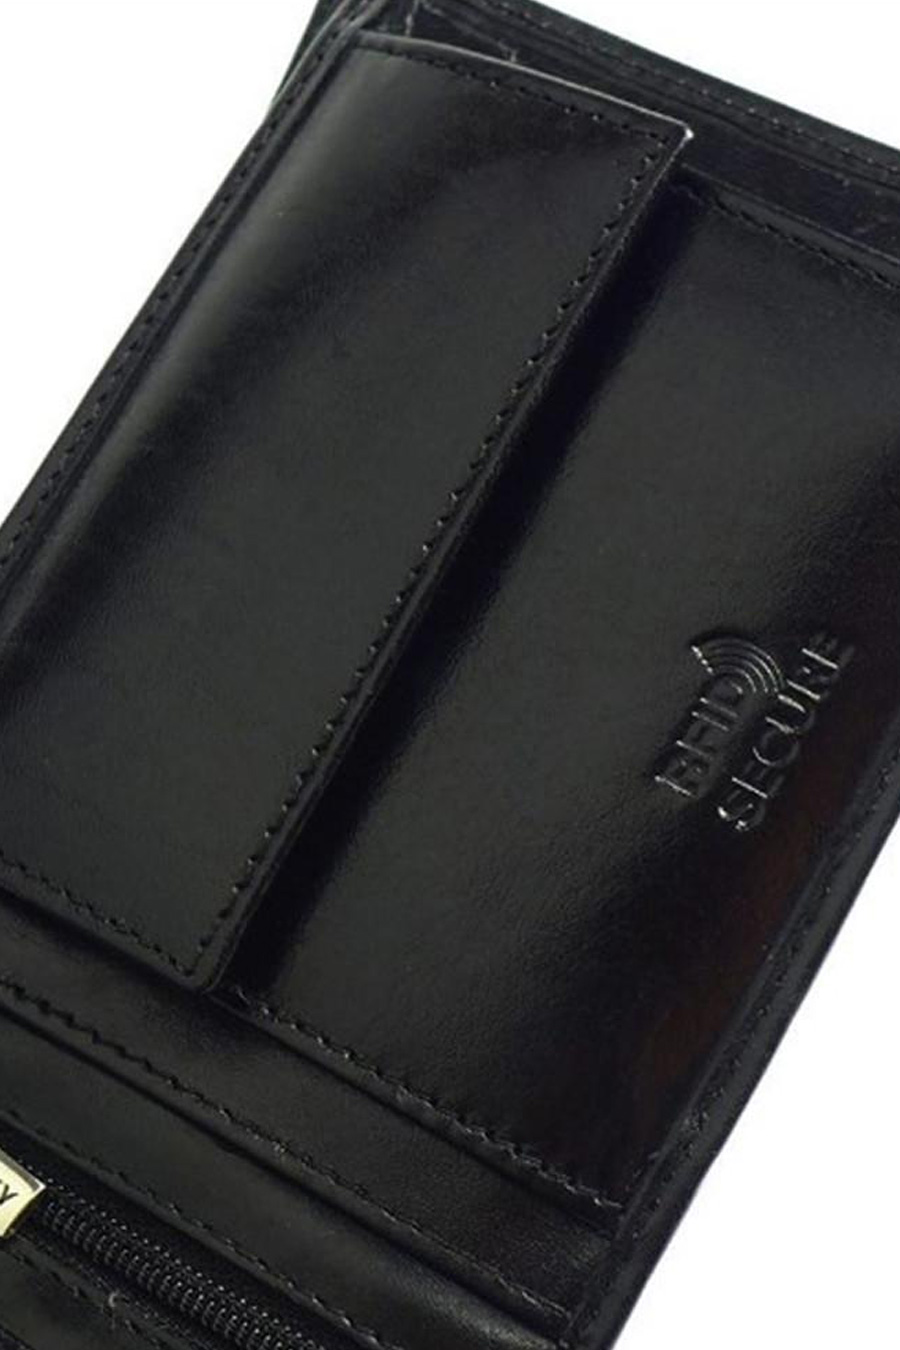 Wallet ROVICKY N992-RVT-BLACK